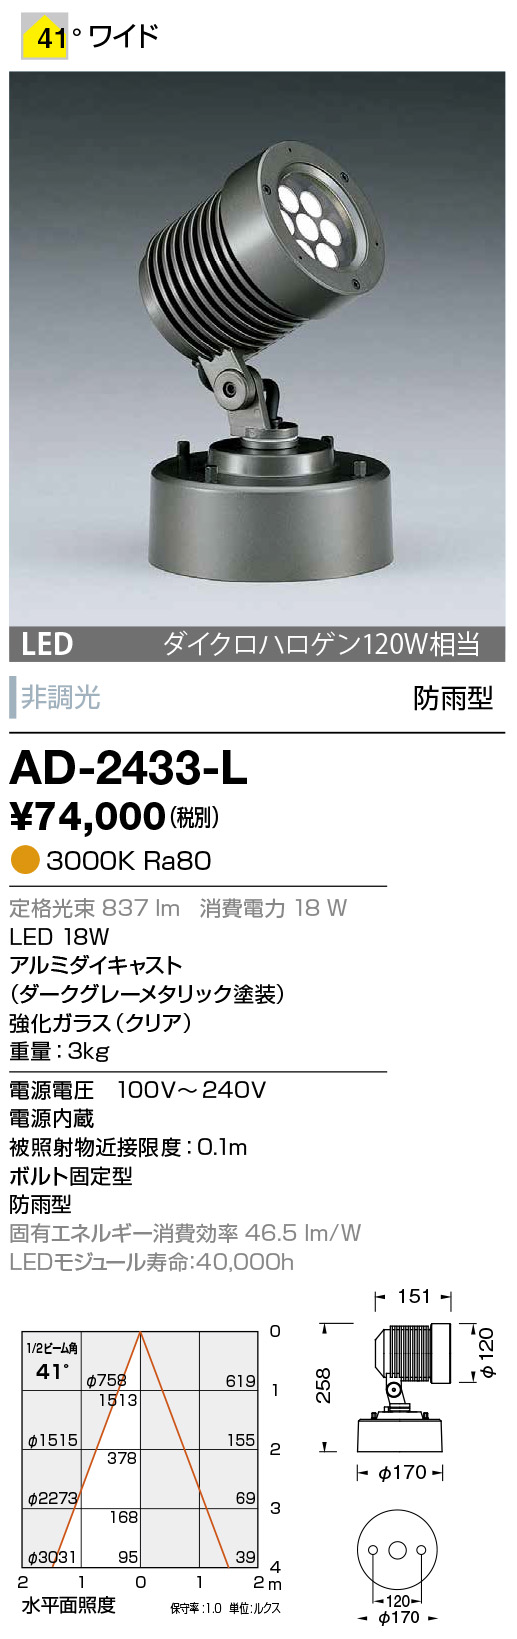 AD-3145-N 山田照明 屋外用スポットライト 黒色 LED（昼白色） 36度 - 3